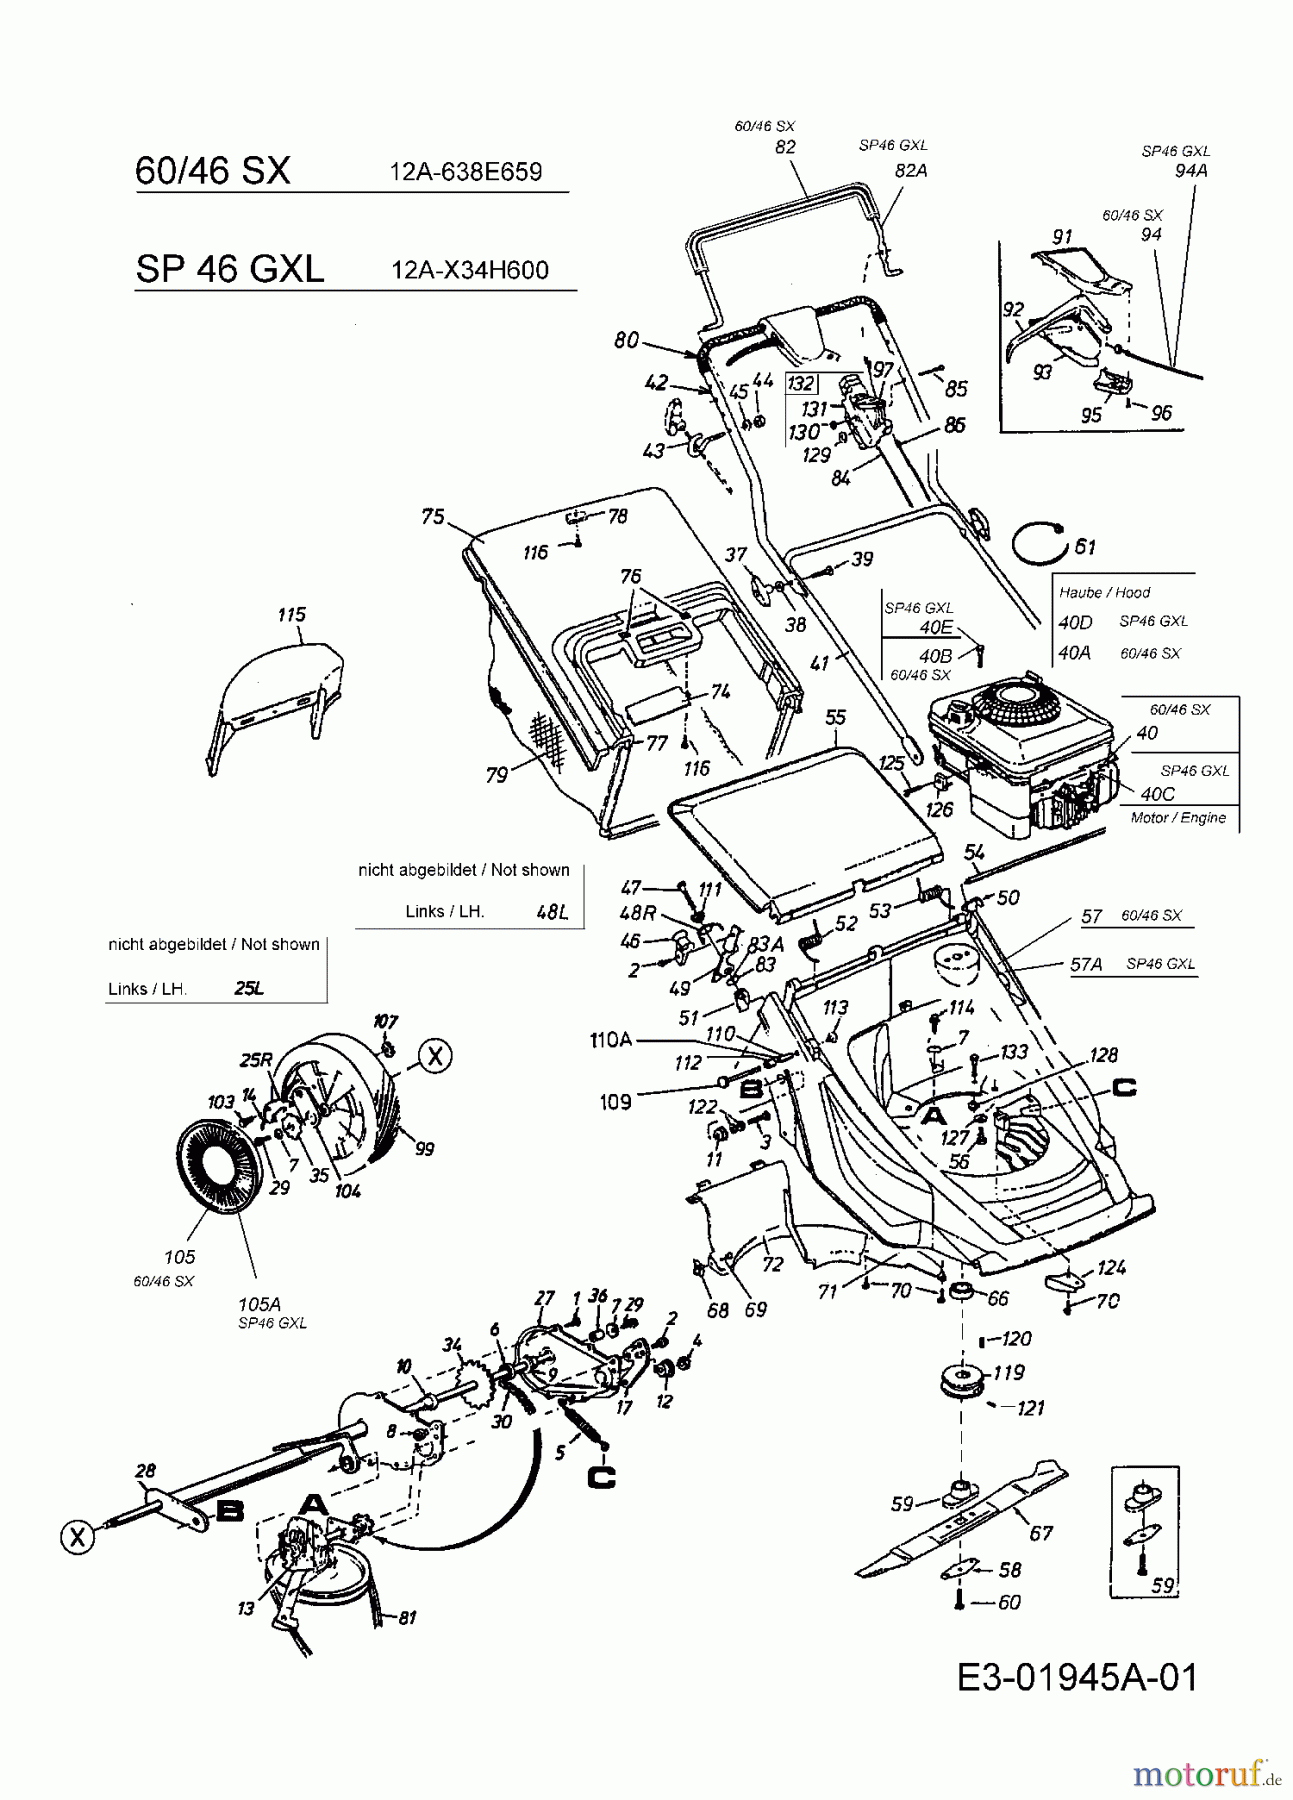  MTD Motormäher mit Antrieb SP 46 GXL 12A-X34H600  (2004) Grundgerät